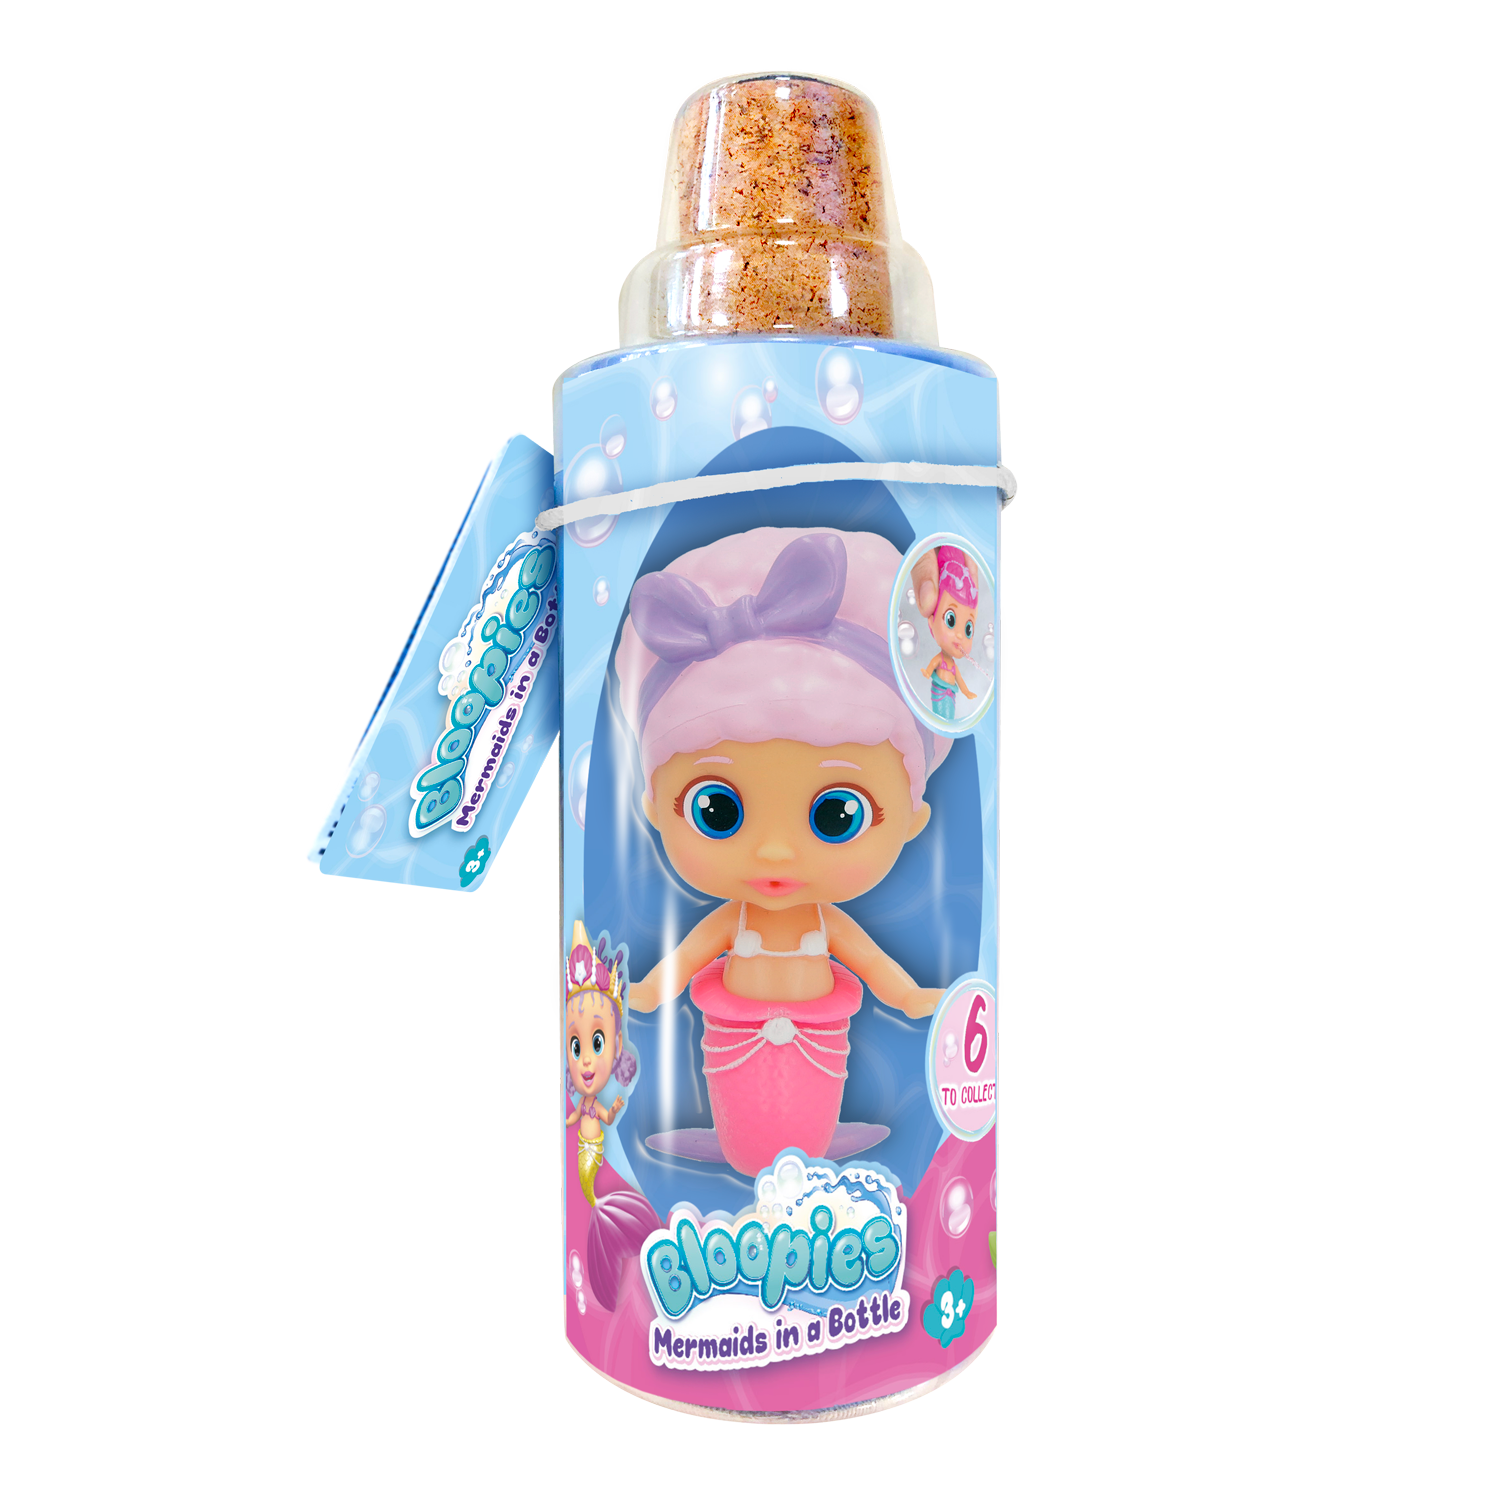 Bloopies mermaids in a bottle, sirenette spruzza-acqua in bottiglia - 